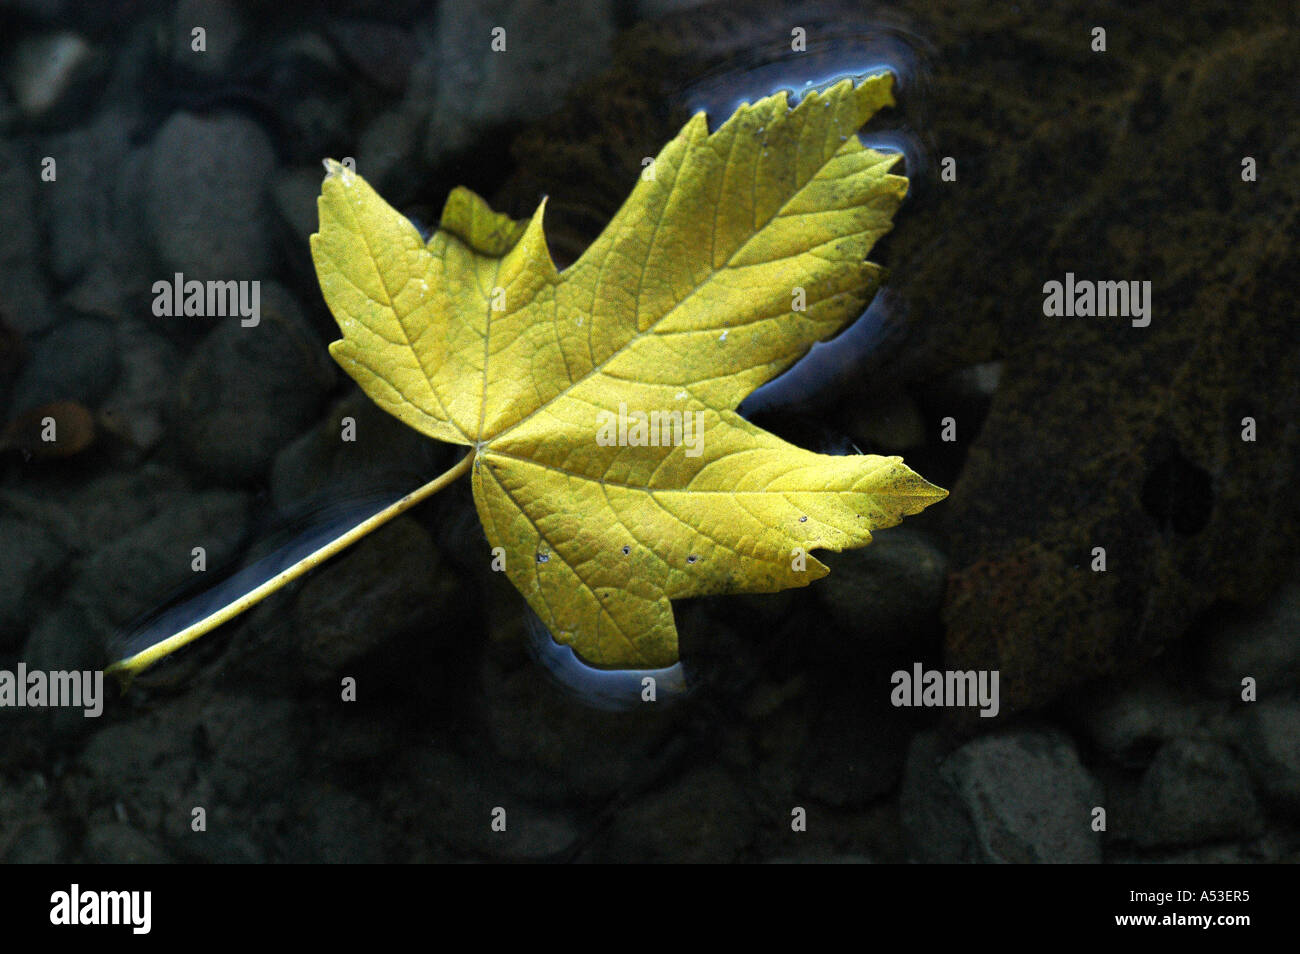 Yellow maple leaf, adrift in dark water Stock Photo